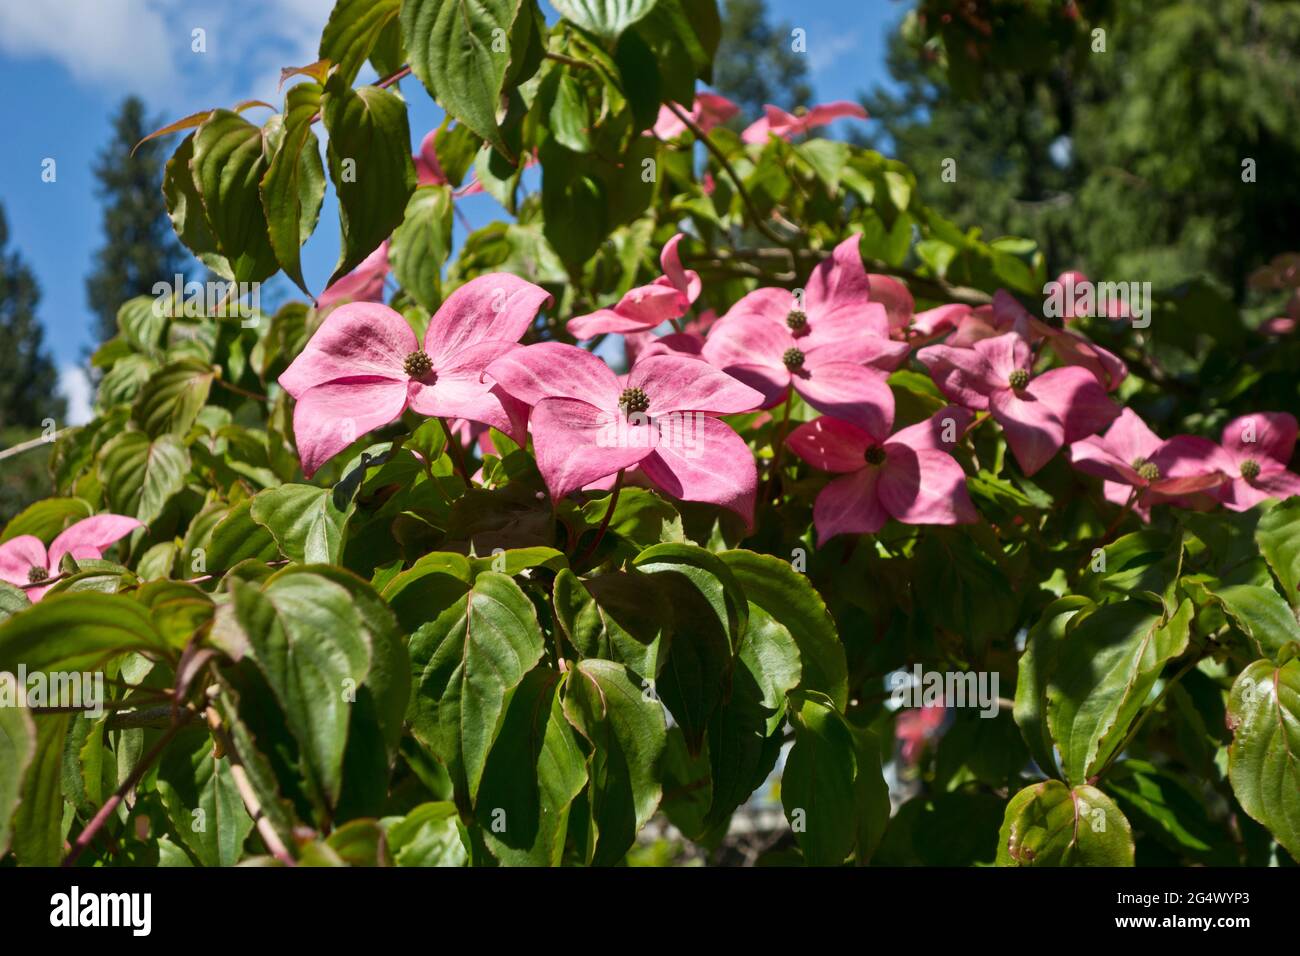 Flowers of the pink flowering dogwood tree, Cornus florida 'Rubra'. Stock Photo